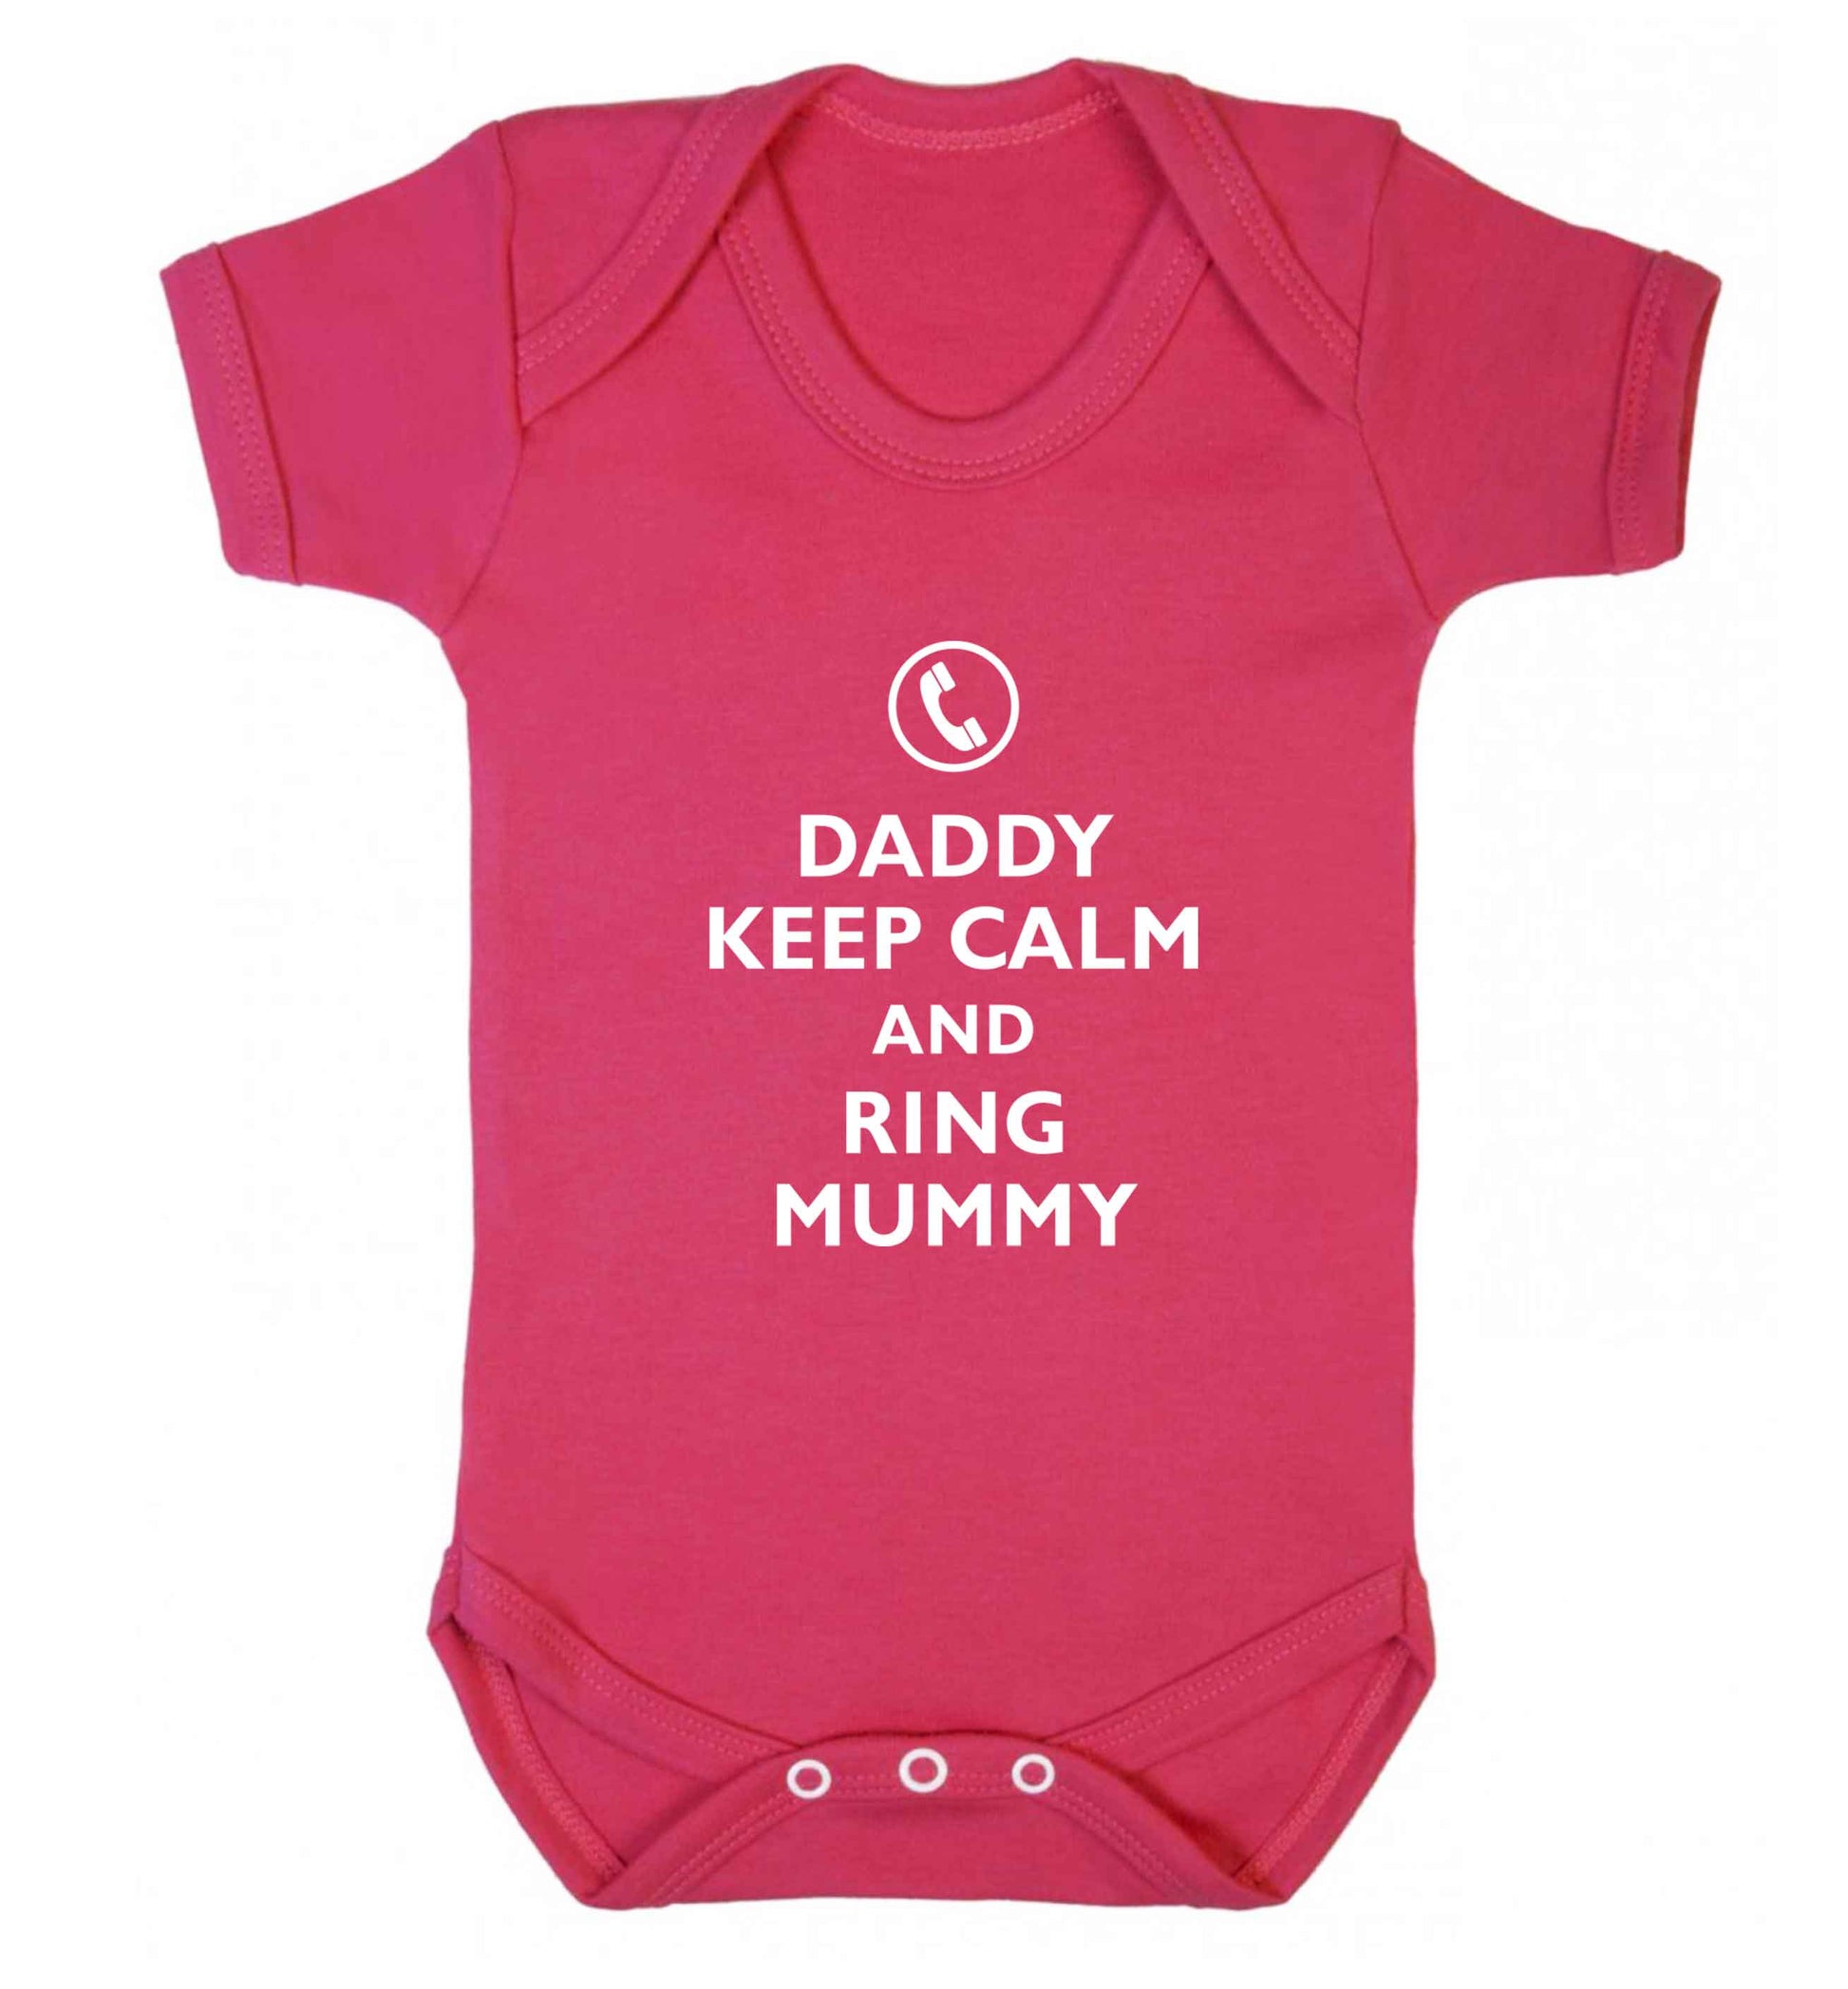 Daddy keep calm and ring mummy baby vest dark pink 18-24 months